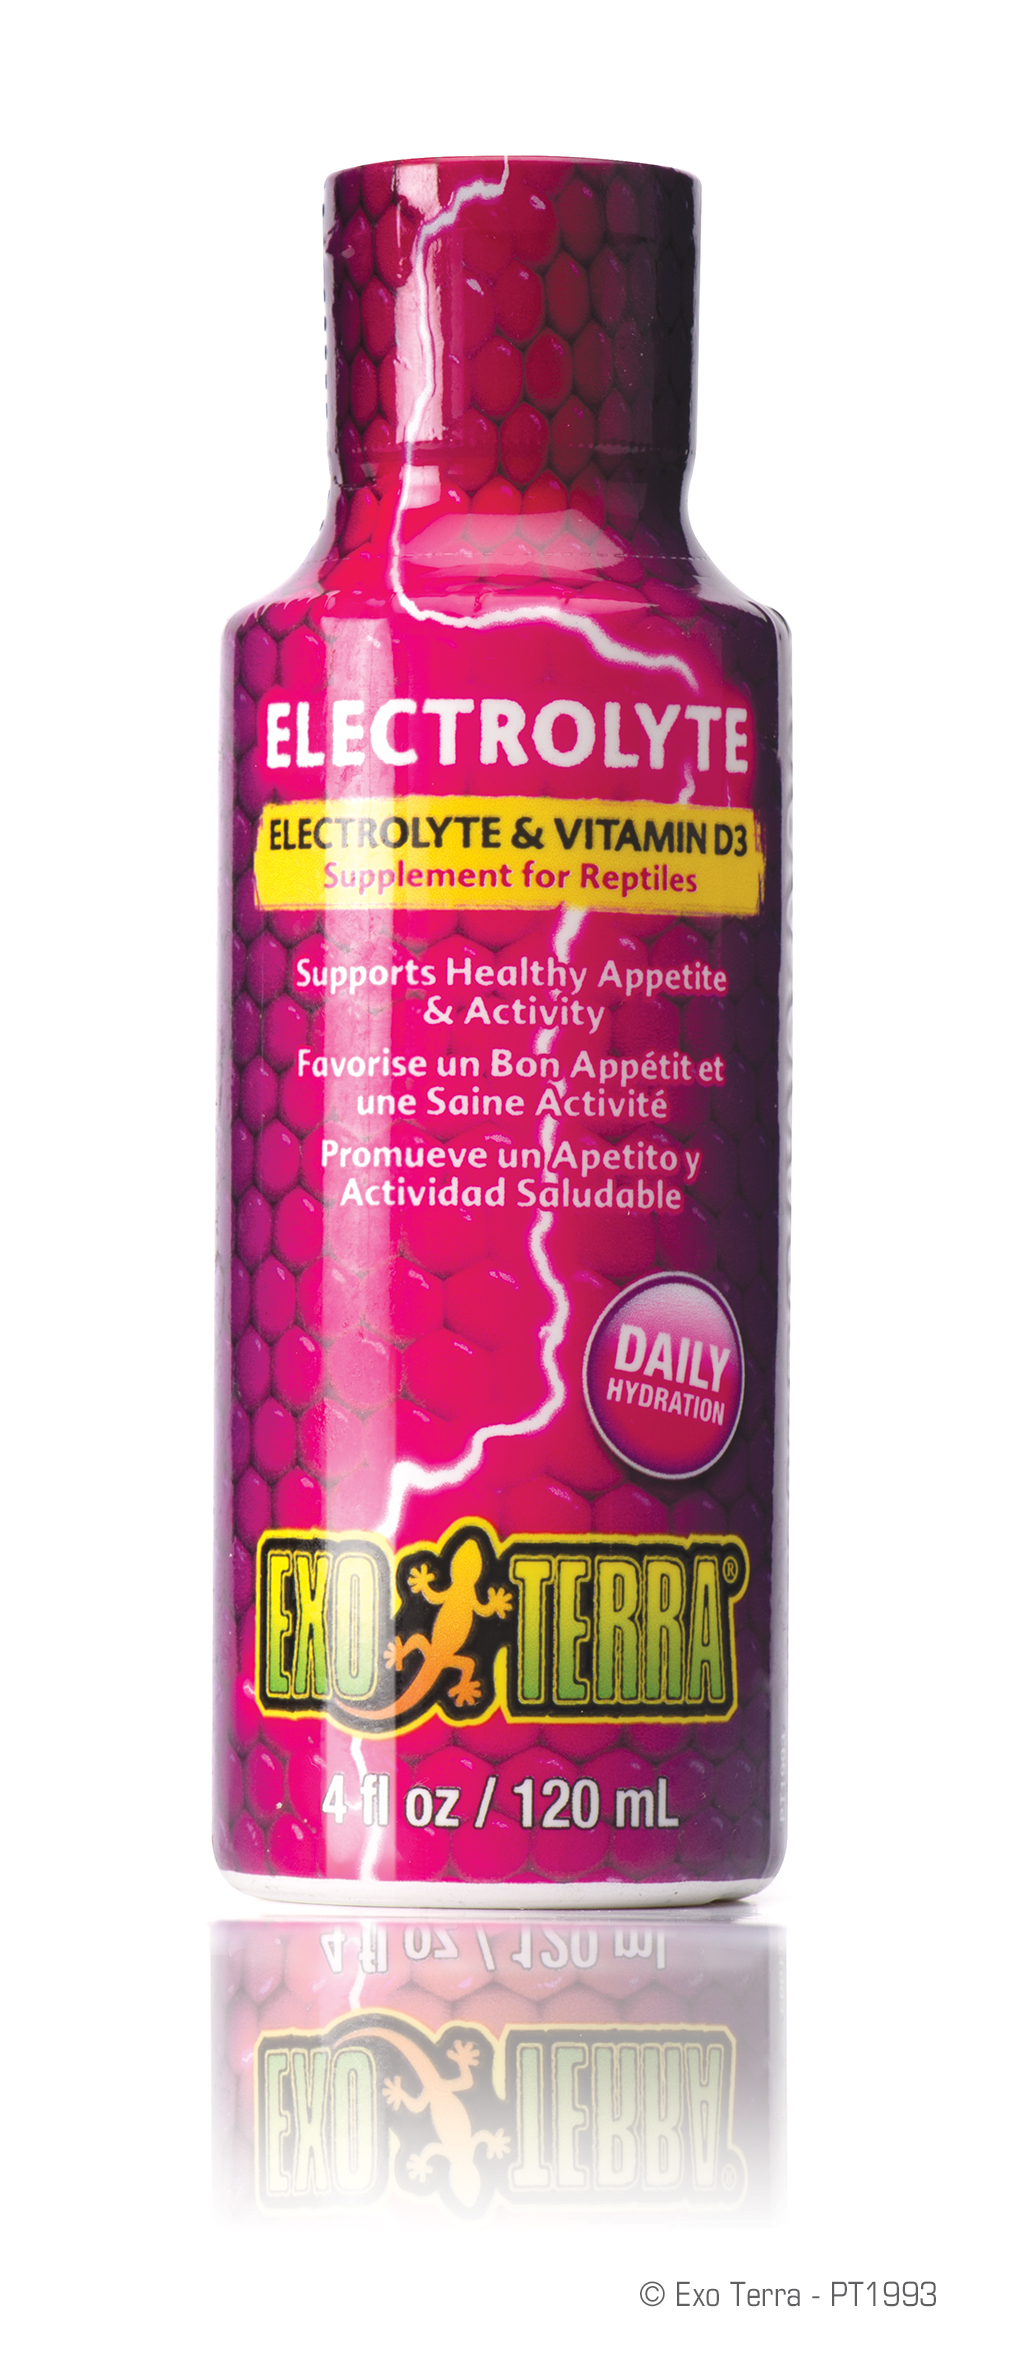 Ex electrolyte vitamine d3 - Product shot